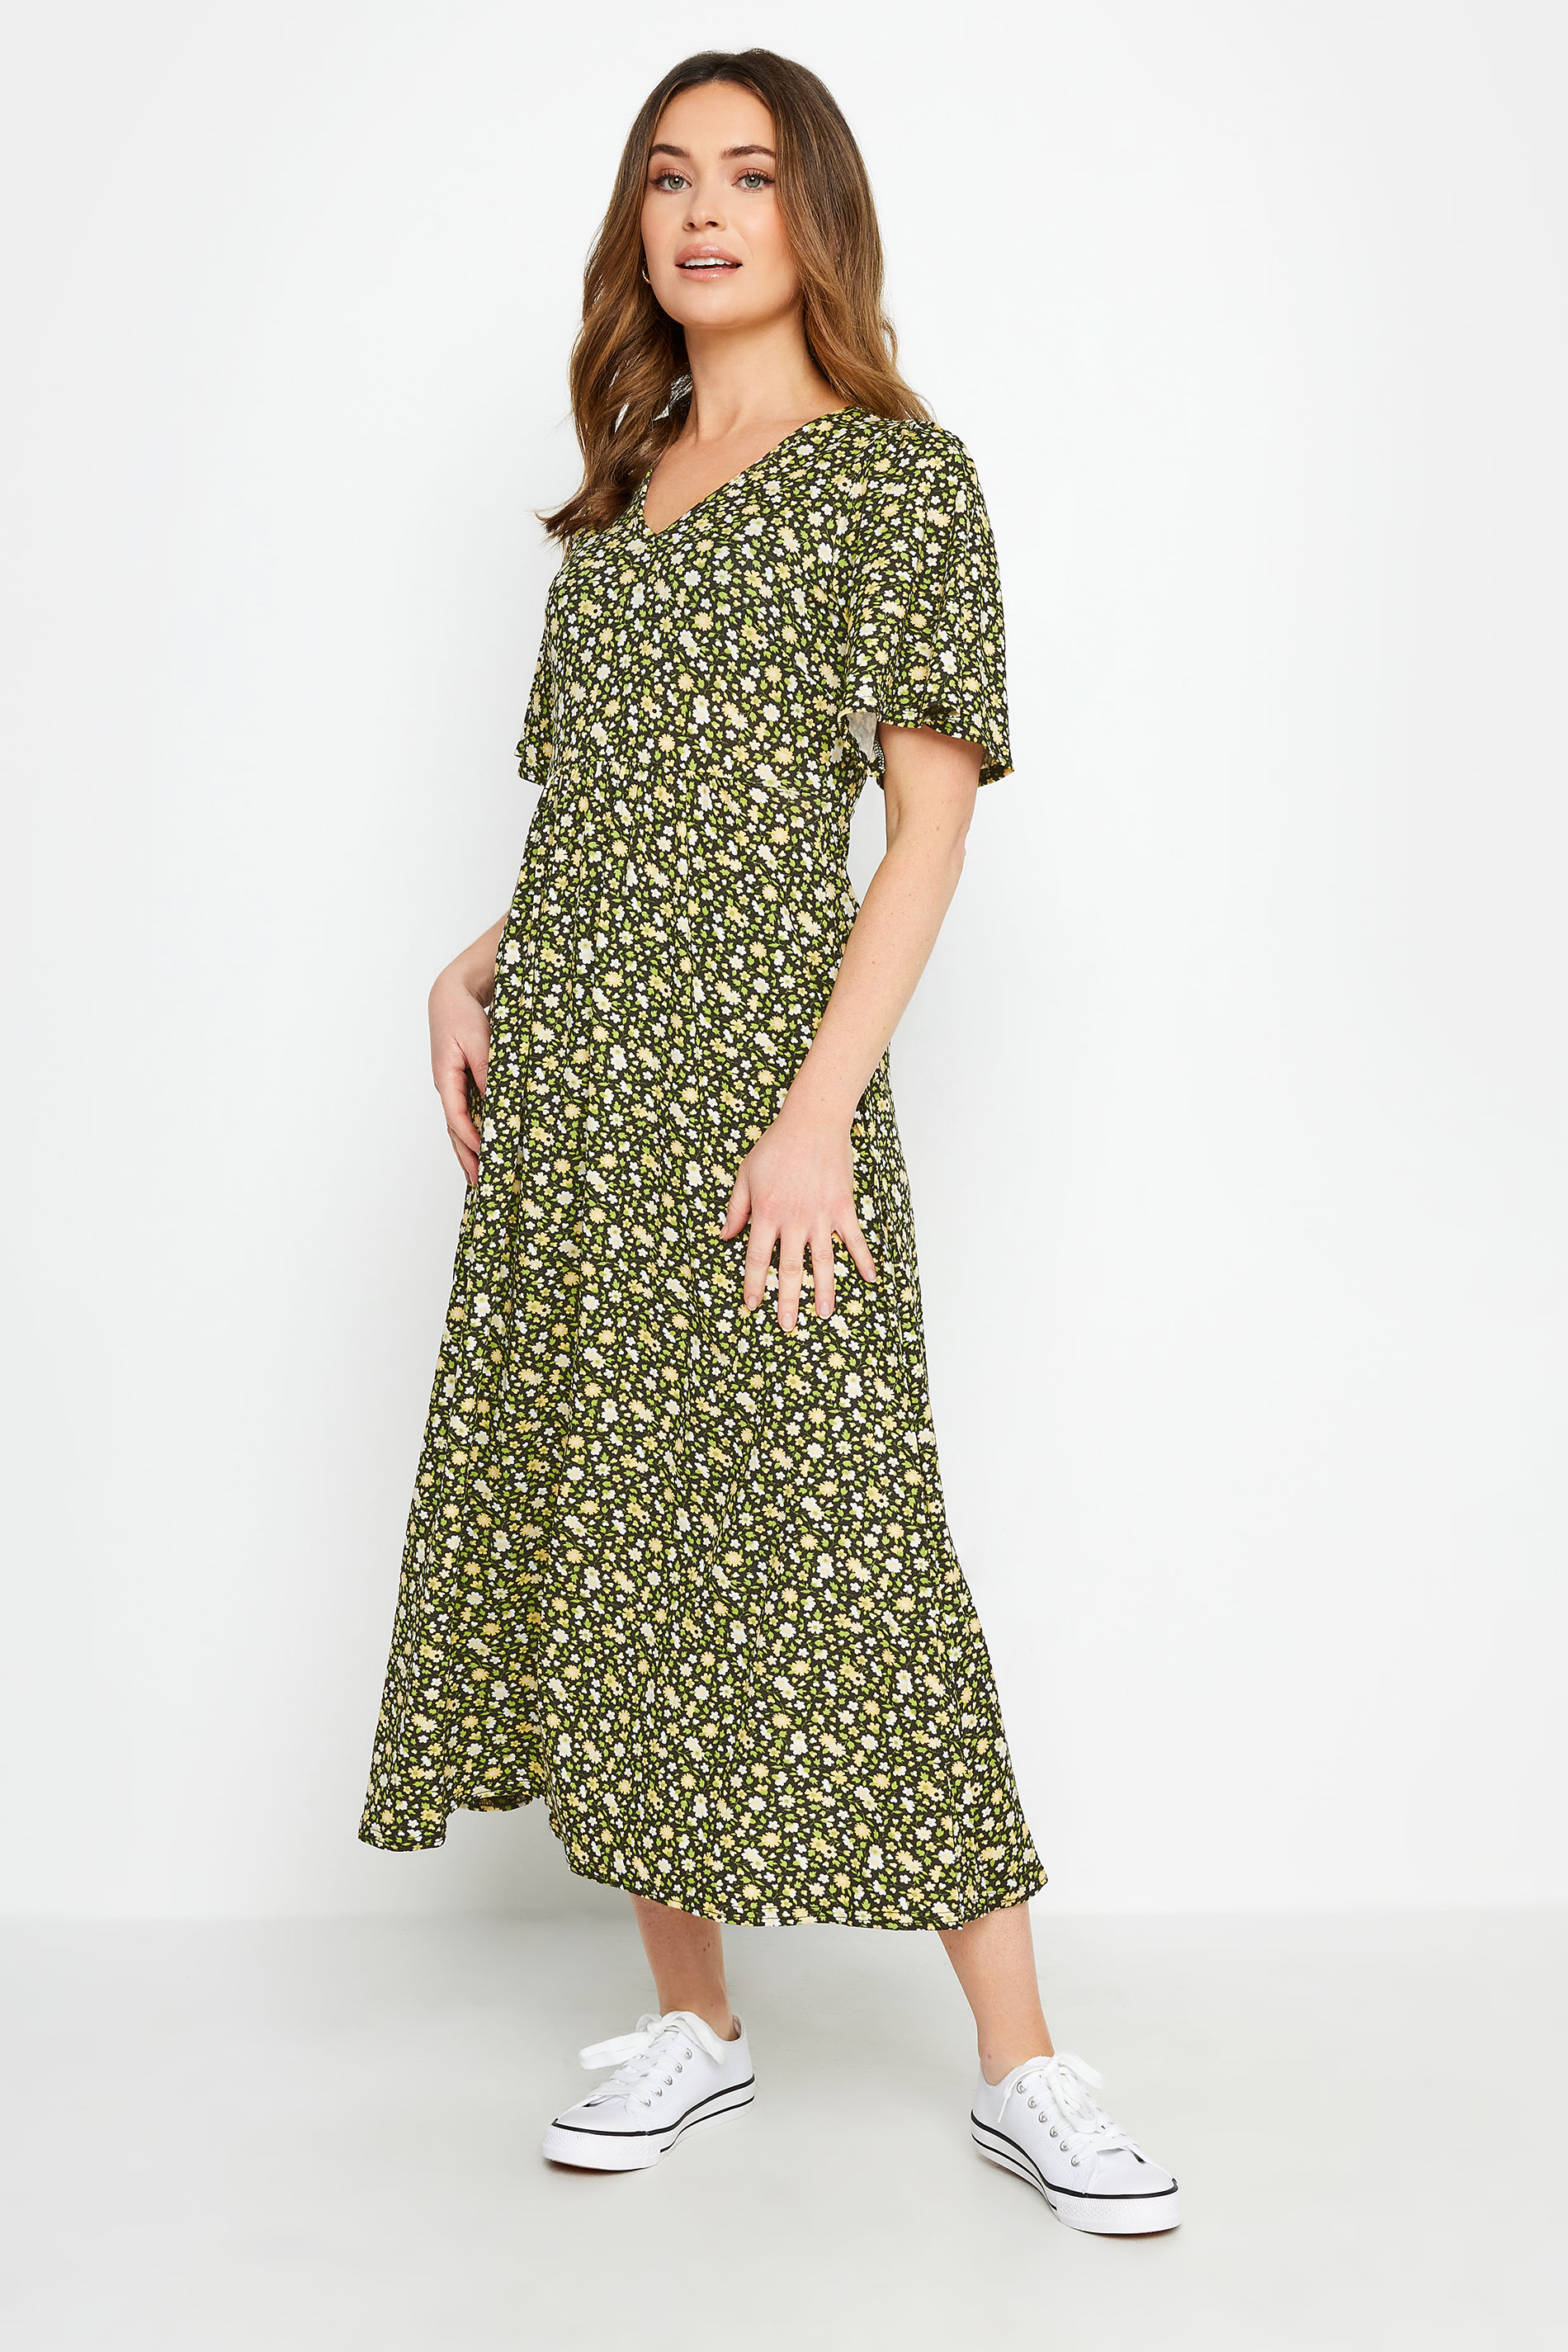 M&Co Petite Green & Yellow Ditsy Floral Print Dress | M&Co